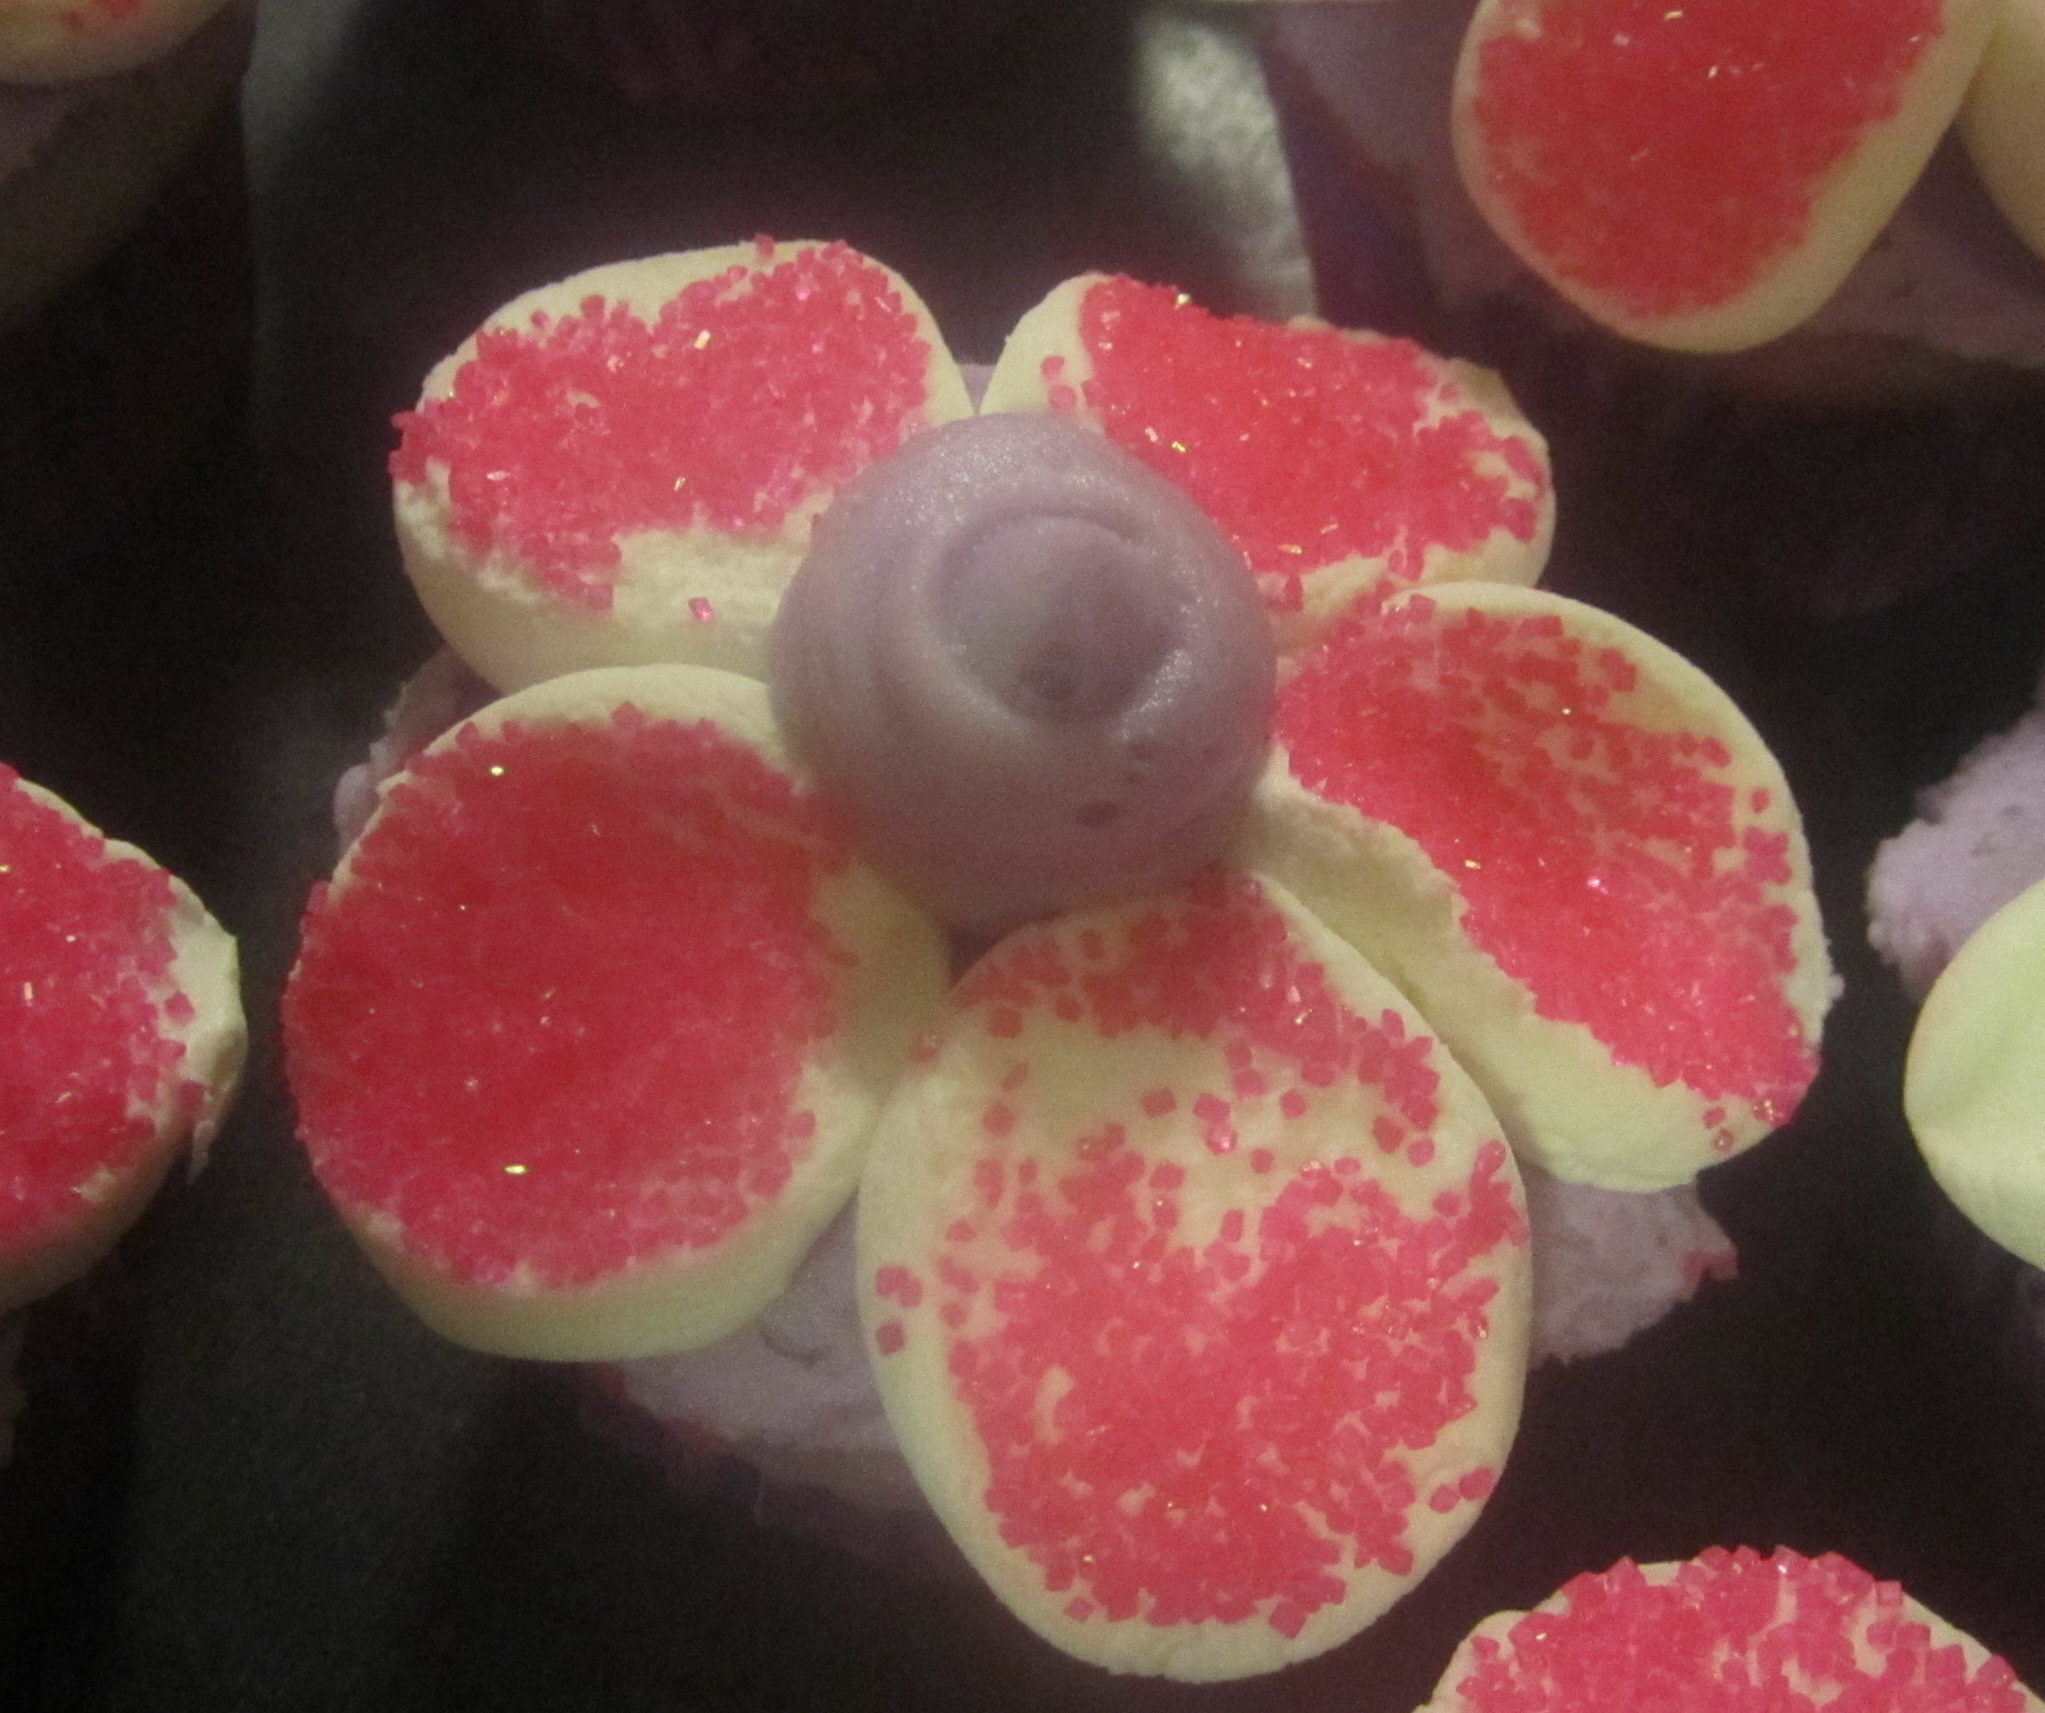 Flower Cupcakes